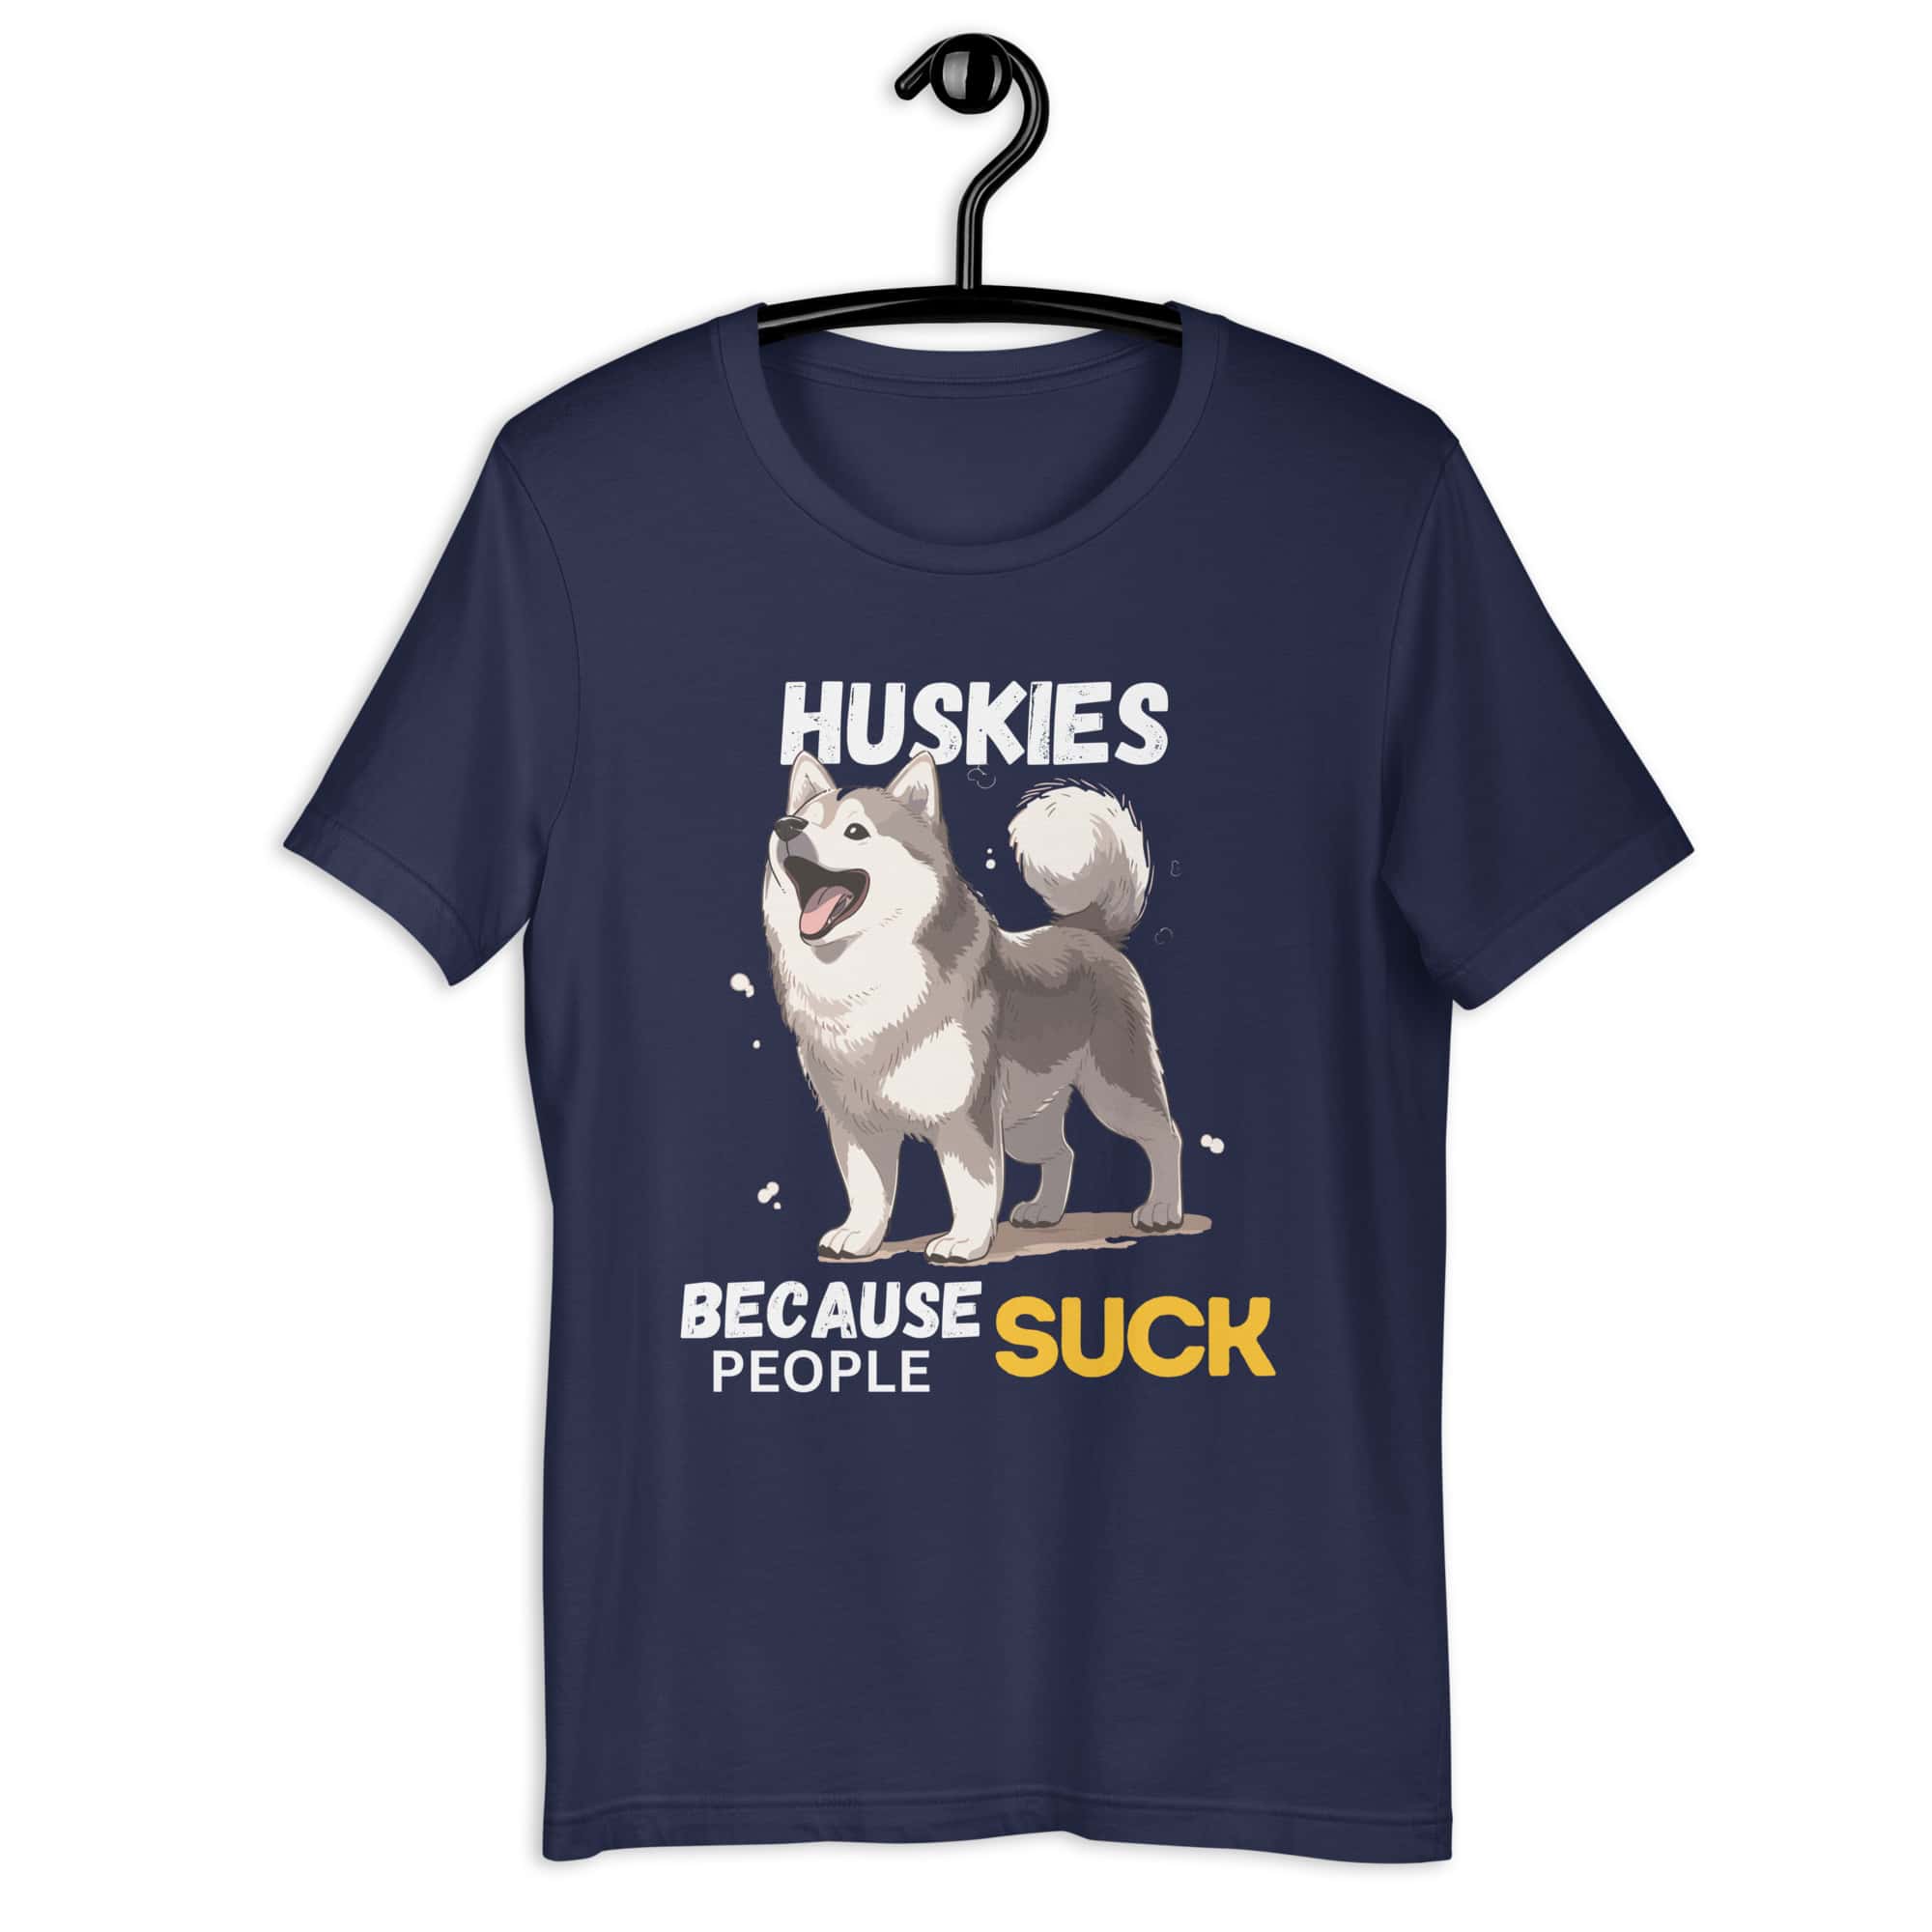 Huskies Because People Suck Unisex T-Shirt navy